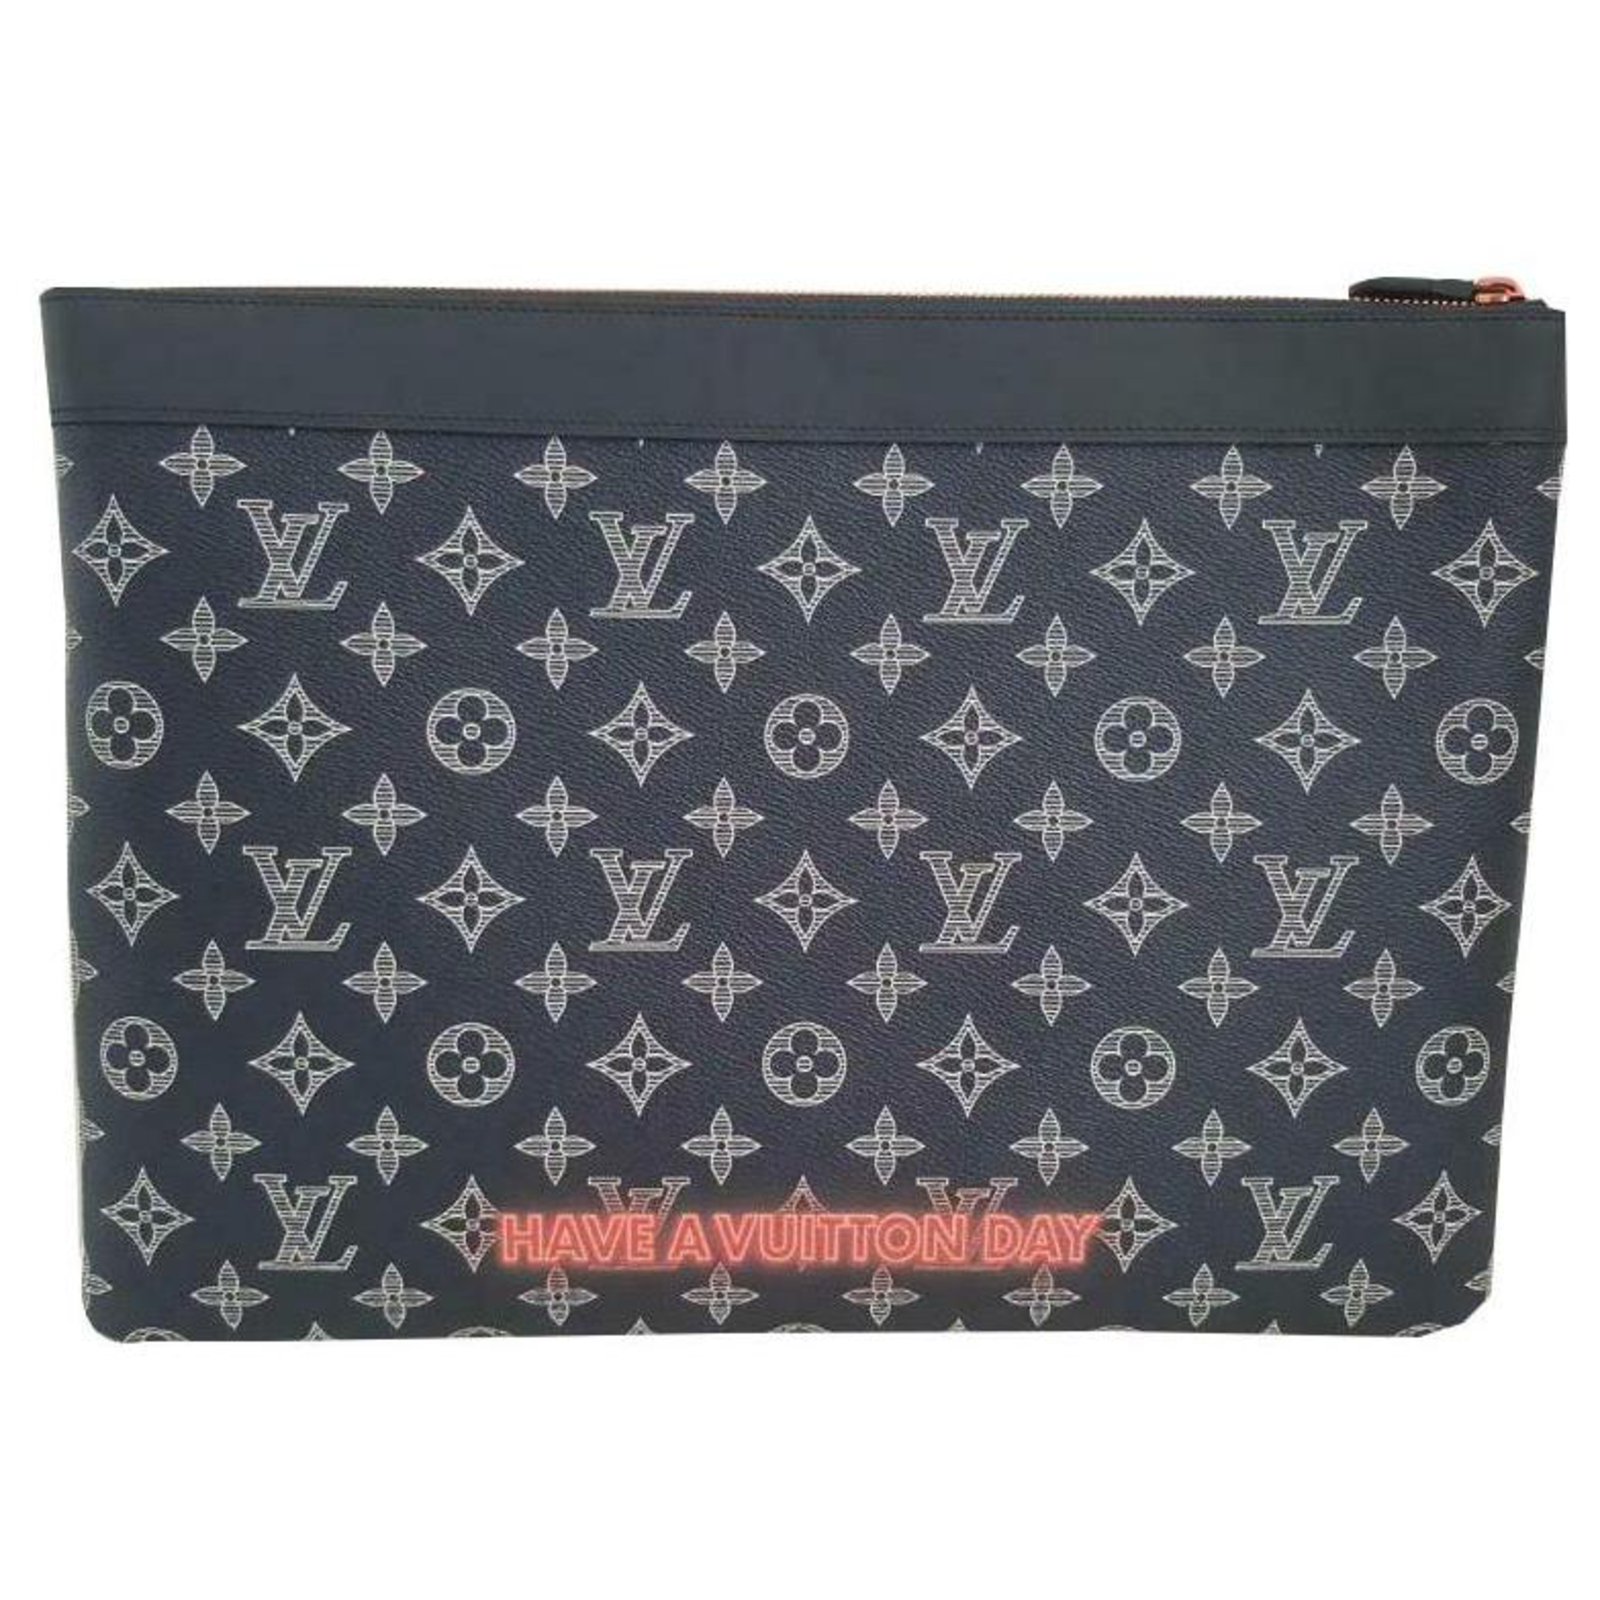 Louis Vuitton Pochette Apollo Limited Edition Clutch Bag Upside